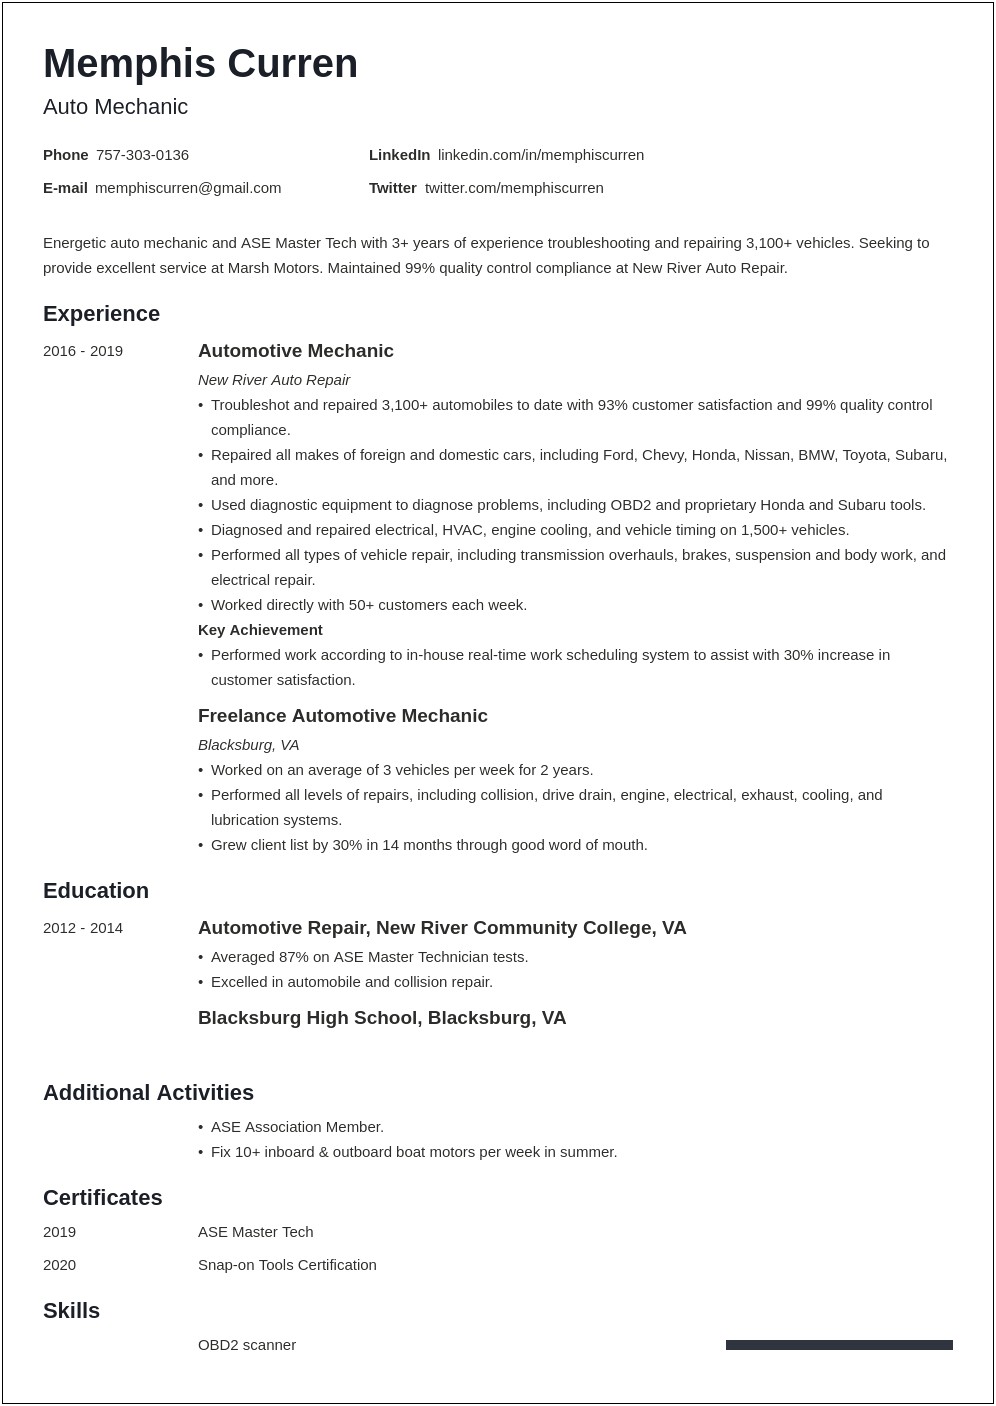 Resume Job Description For Automotive Technician